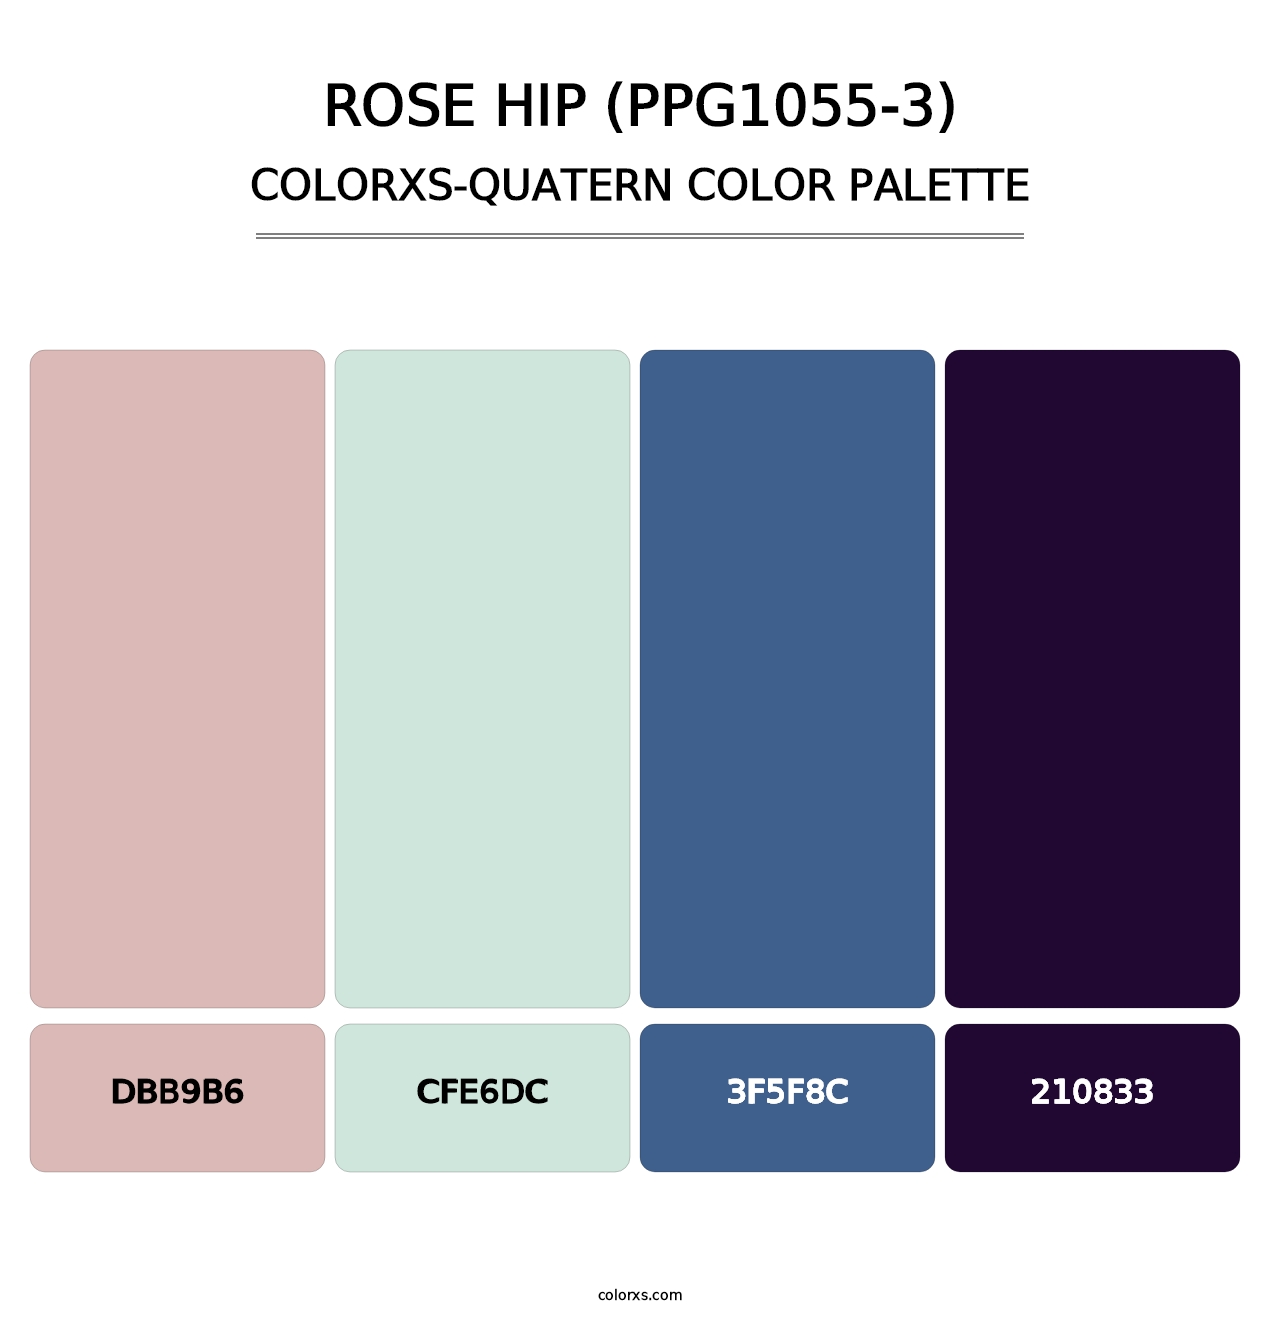 Rose Hip (PPG1055-3) - Colorxs Quatern Palette